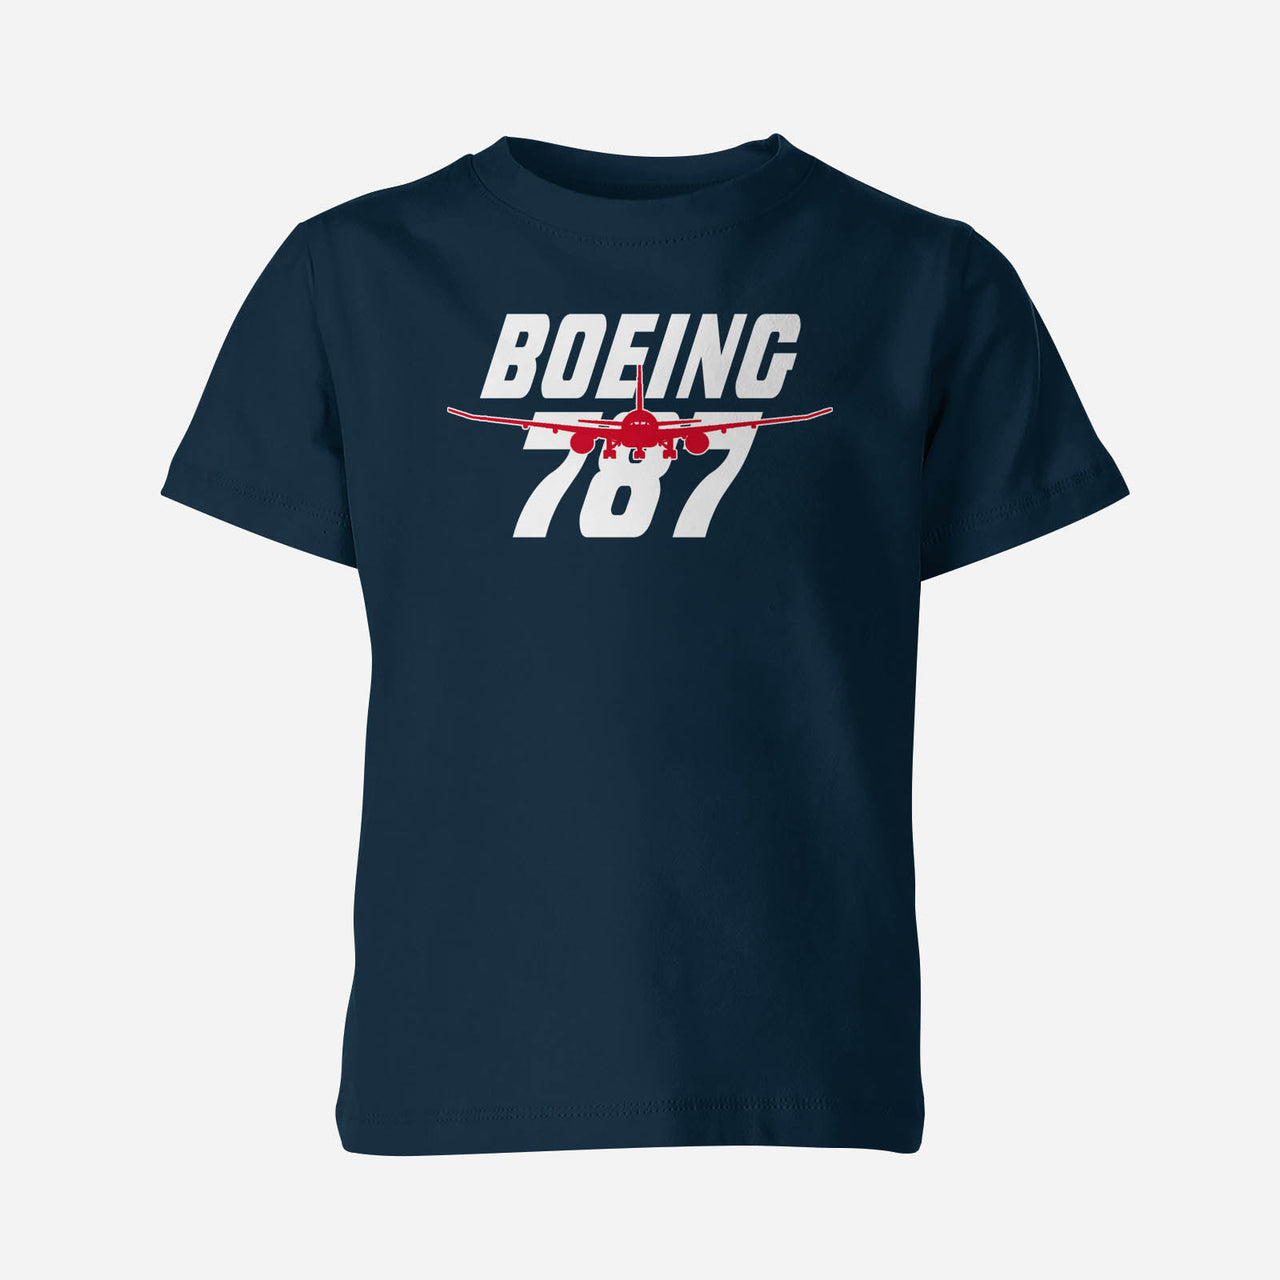 Amazing Boeing 787 Designed Children T-Shirts